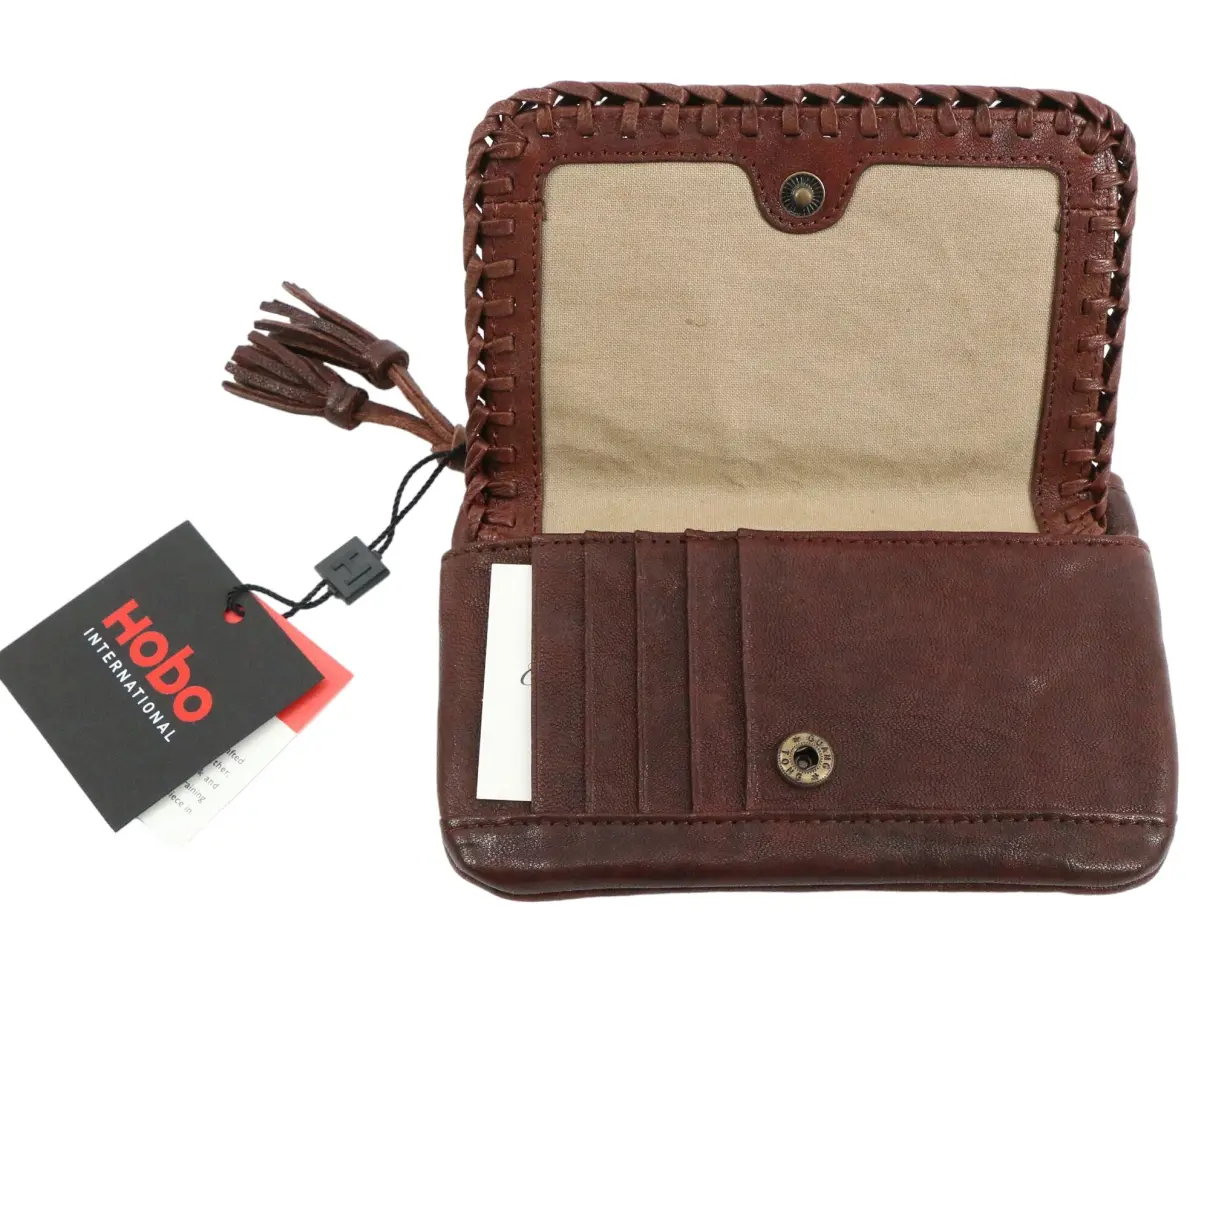 Buy Hobo International Leather wallet online